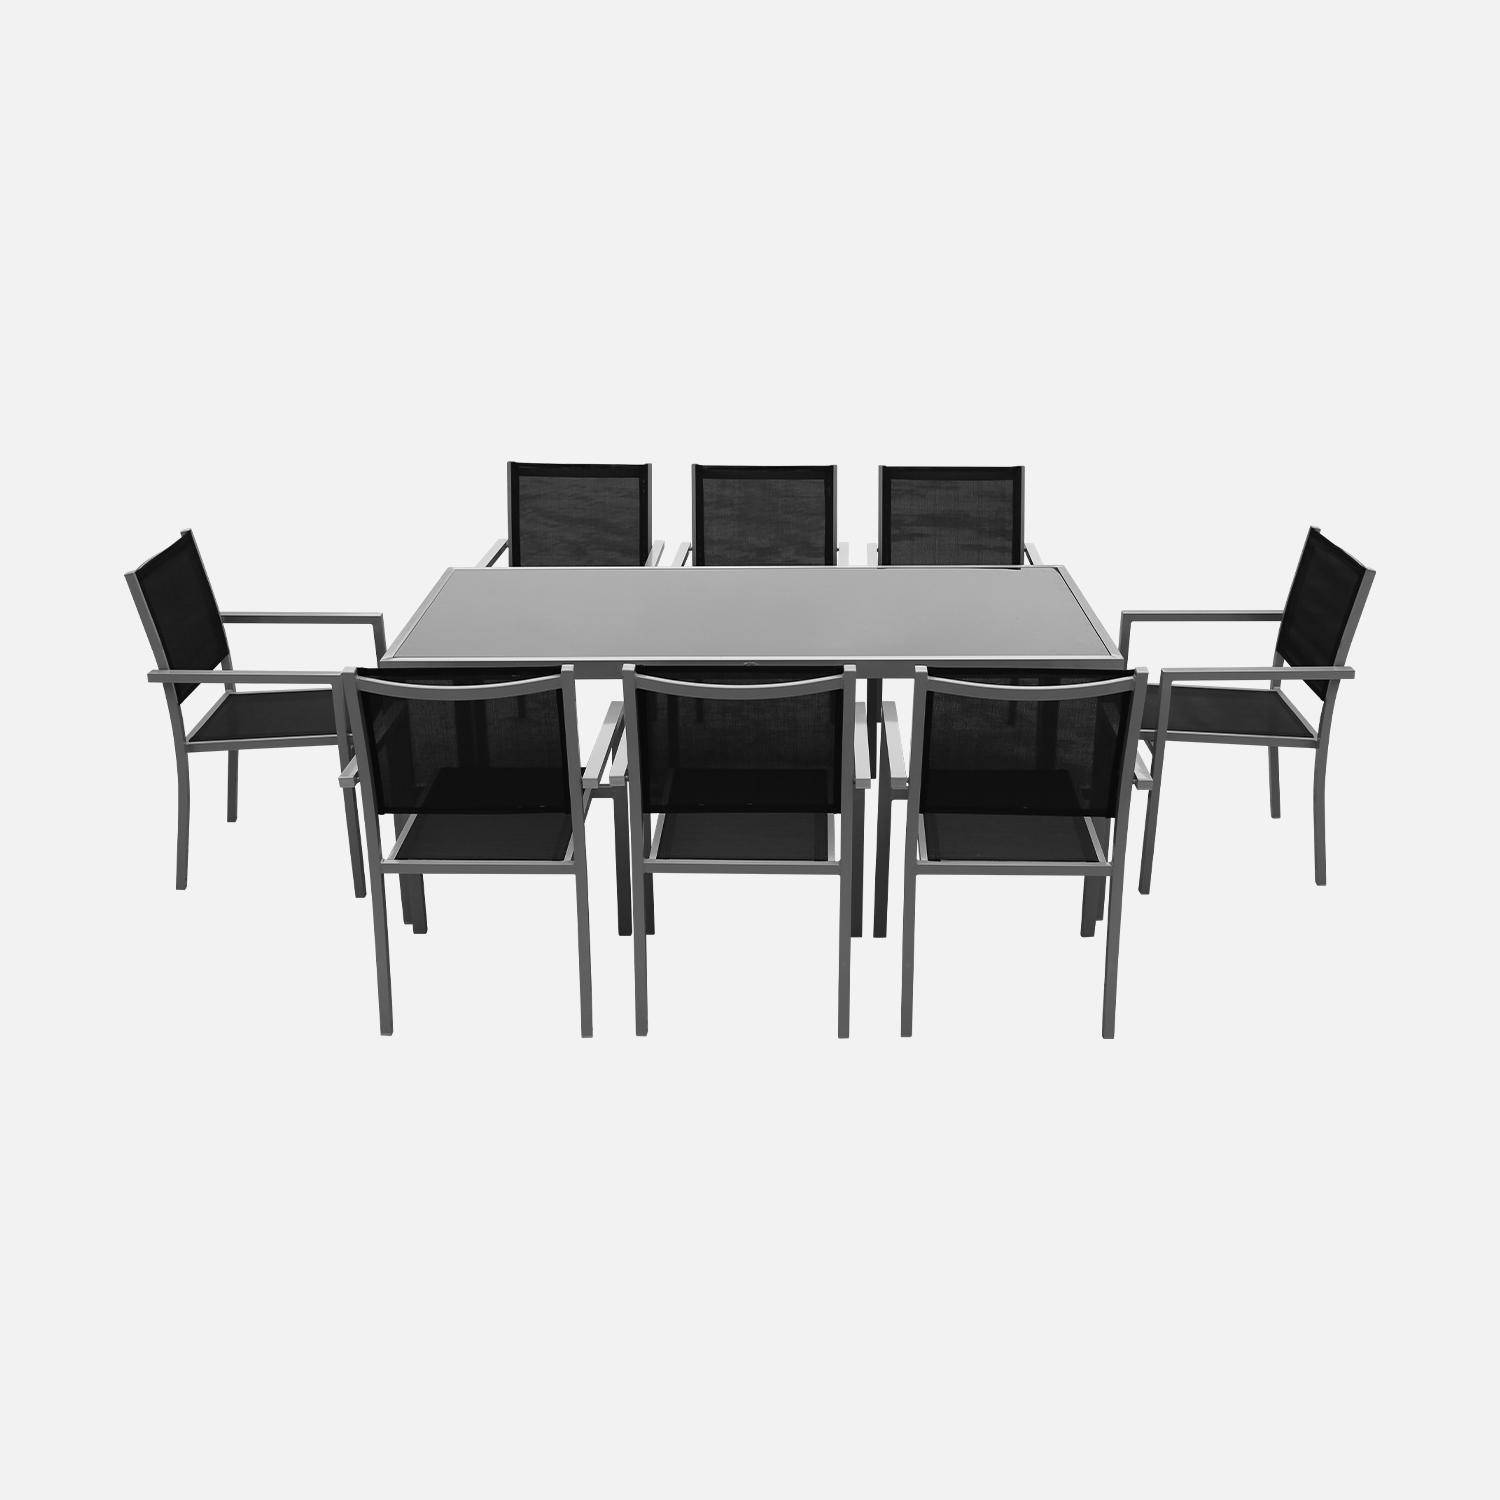 Gartengarnitur aus Aluminium und Textilene - Capua 180 cm - Grau, Schwarz - 8 Plätze - 1 großer rechteckiger Tisch, 8 stapelbare Sessel Photo3